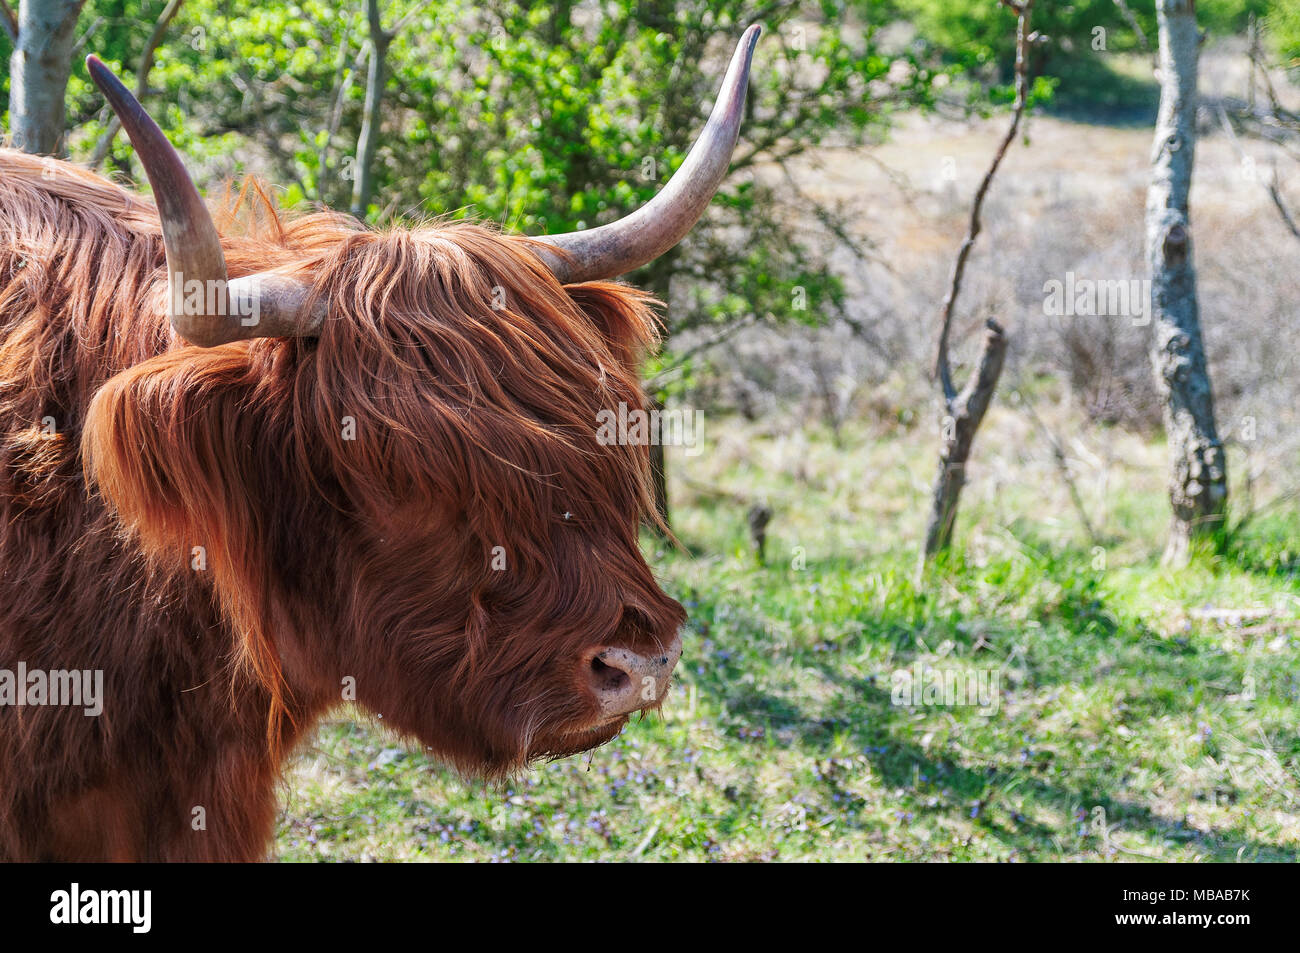 close up of the head of a Scottish highlander animal Stock Photo